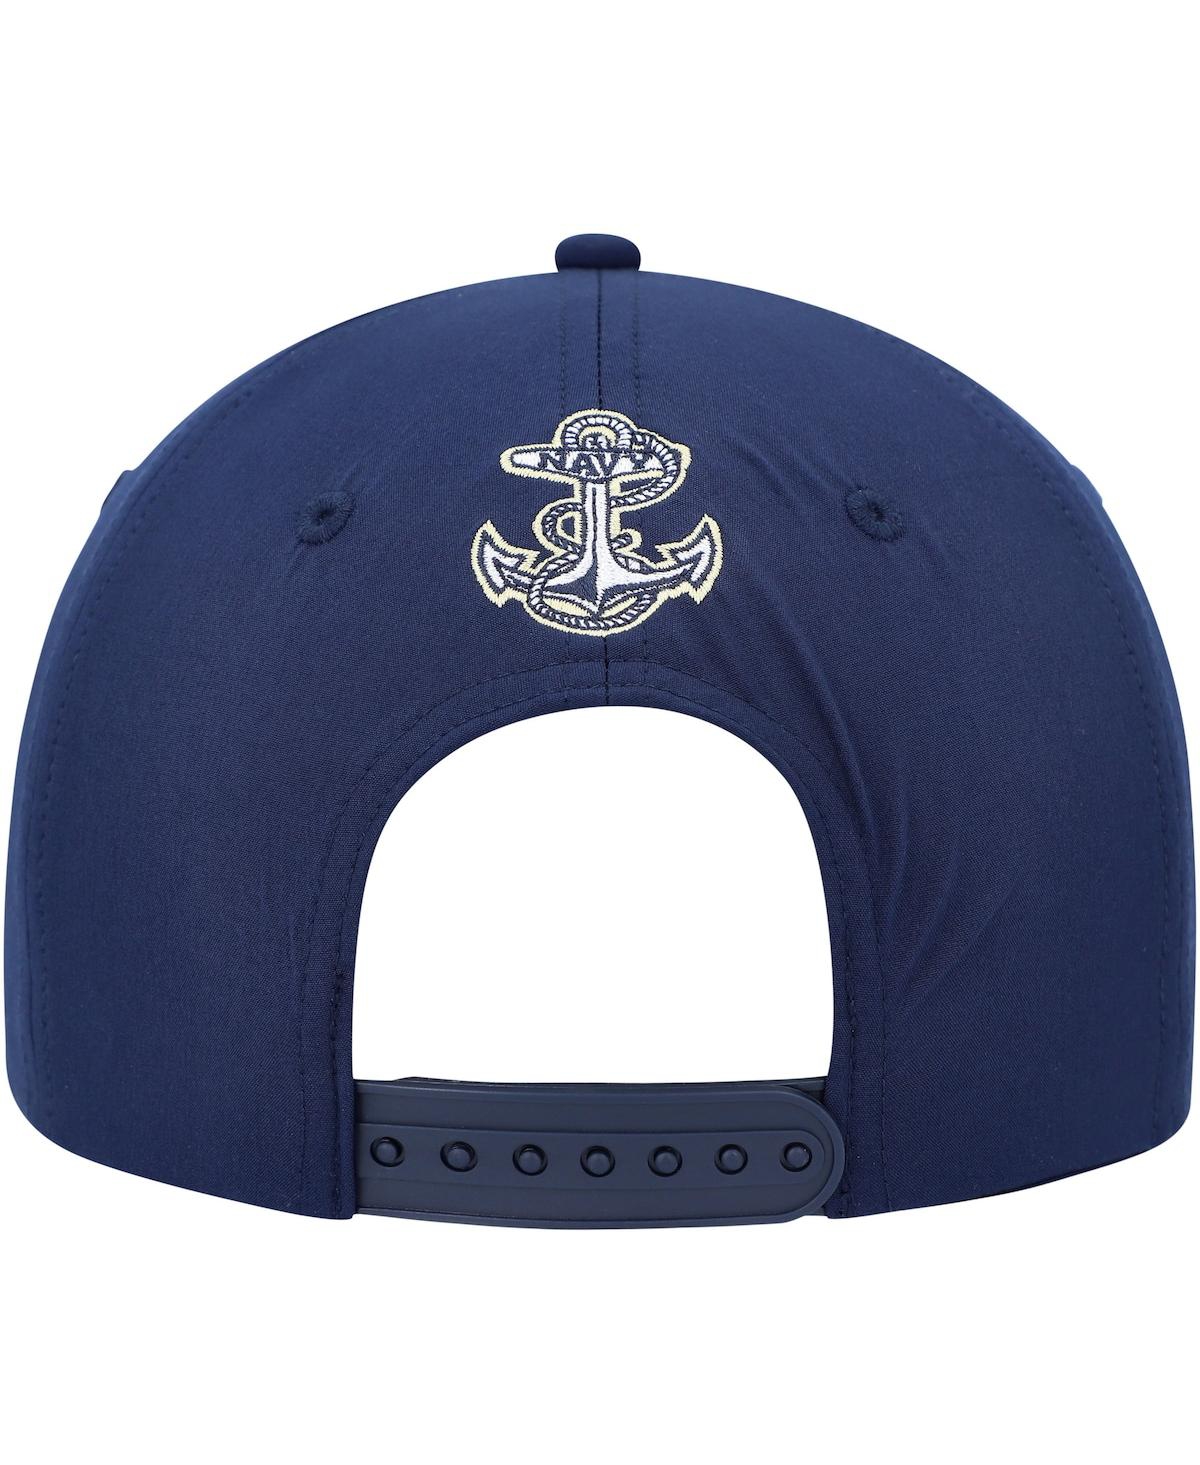 Shop Colosseum Men's  Navy Navy Midshipmen Positraction Snapback Hat